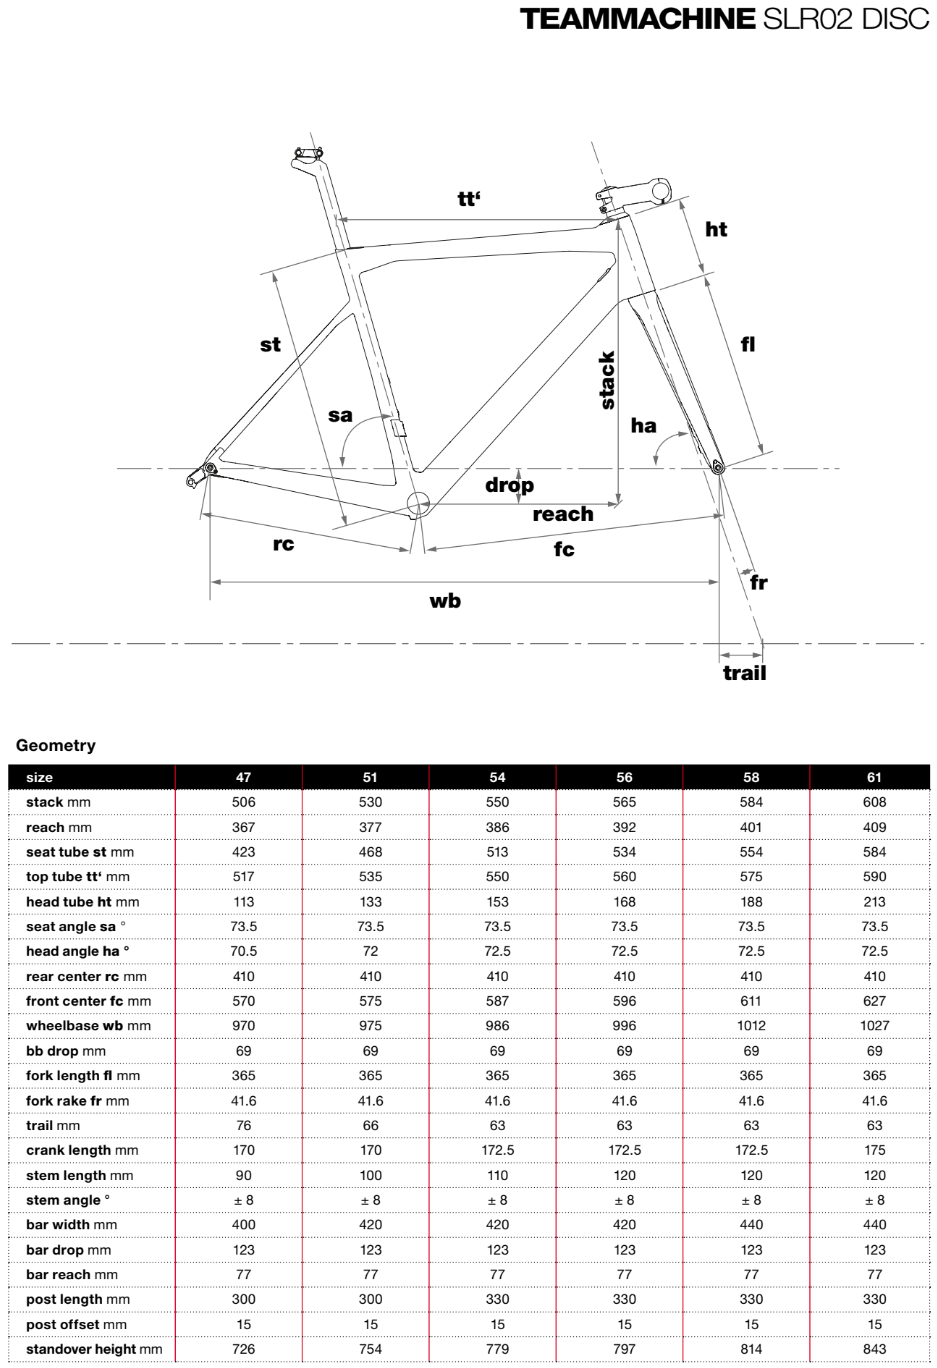 BMC Teammachine SL02 Disc geometry chart